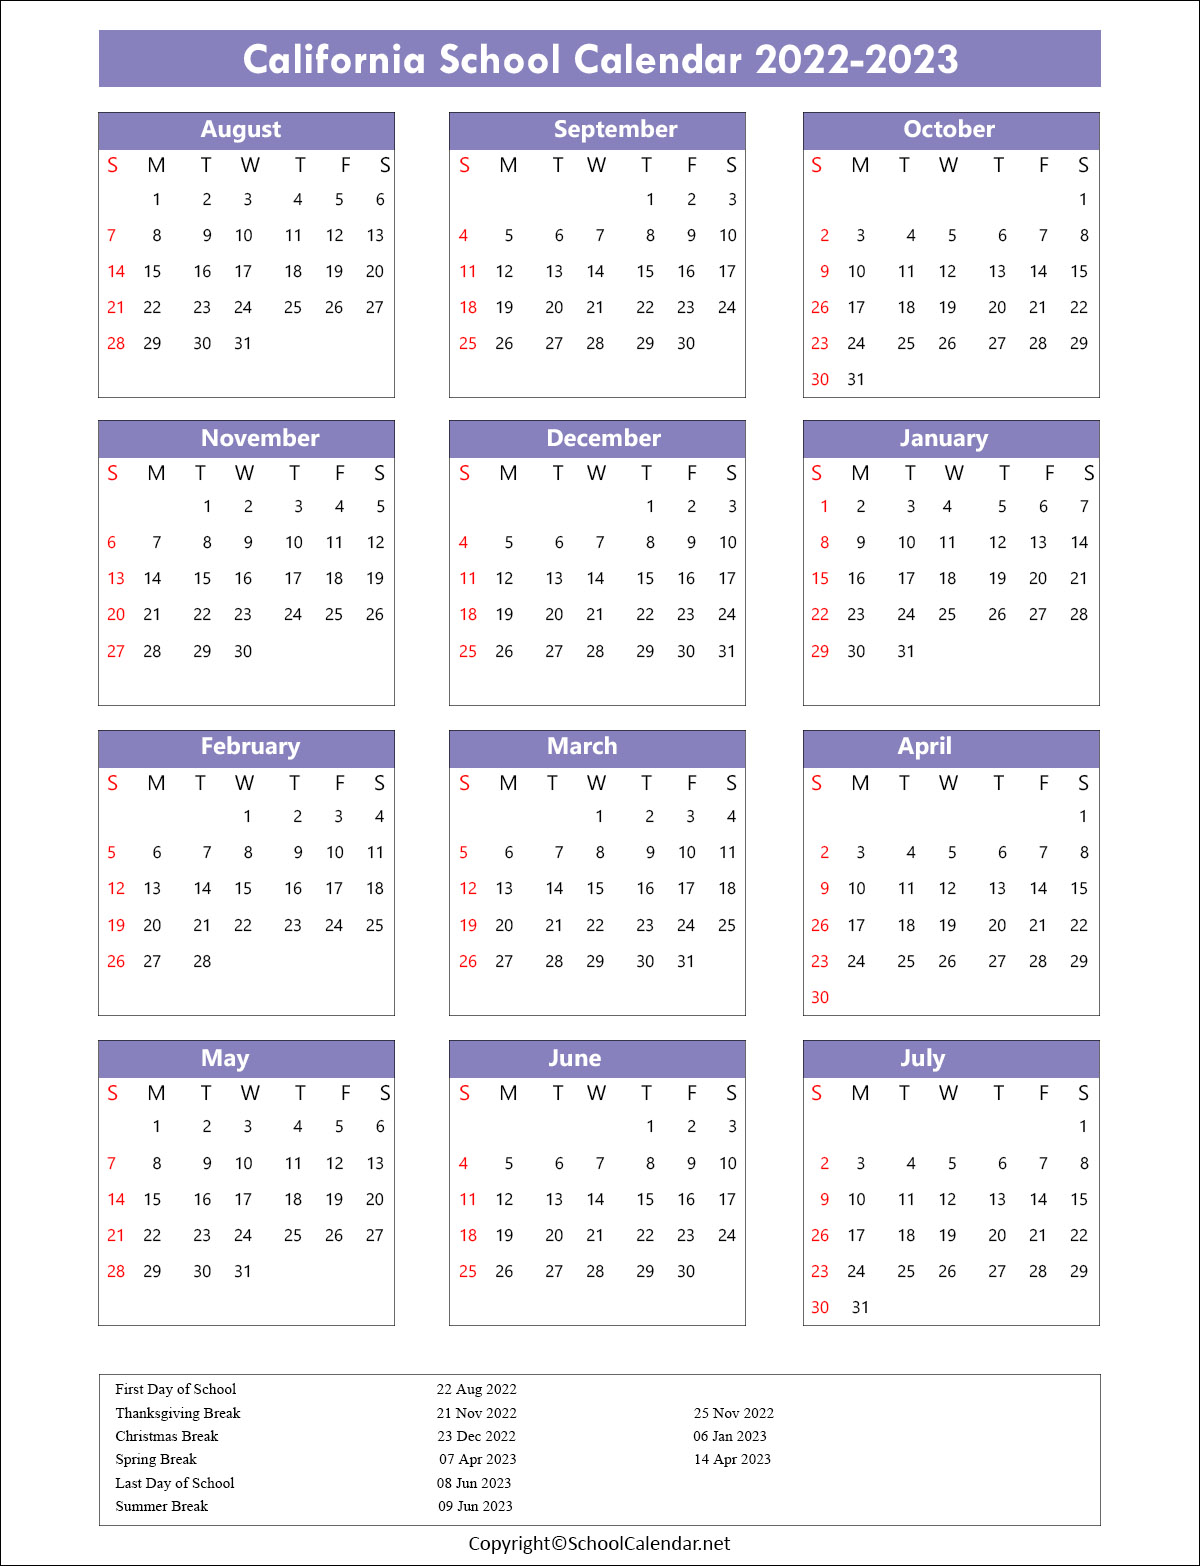 California School Calendar 2022